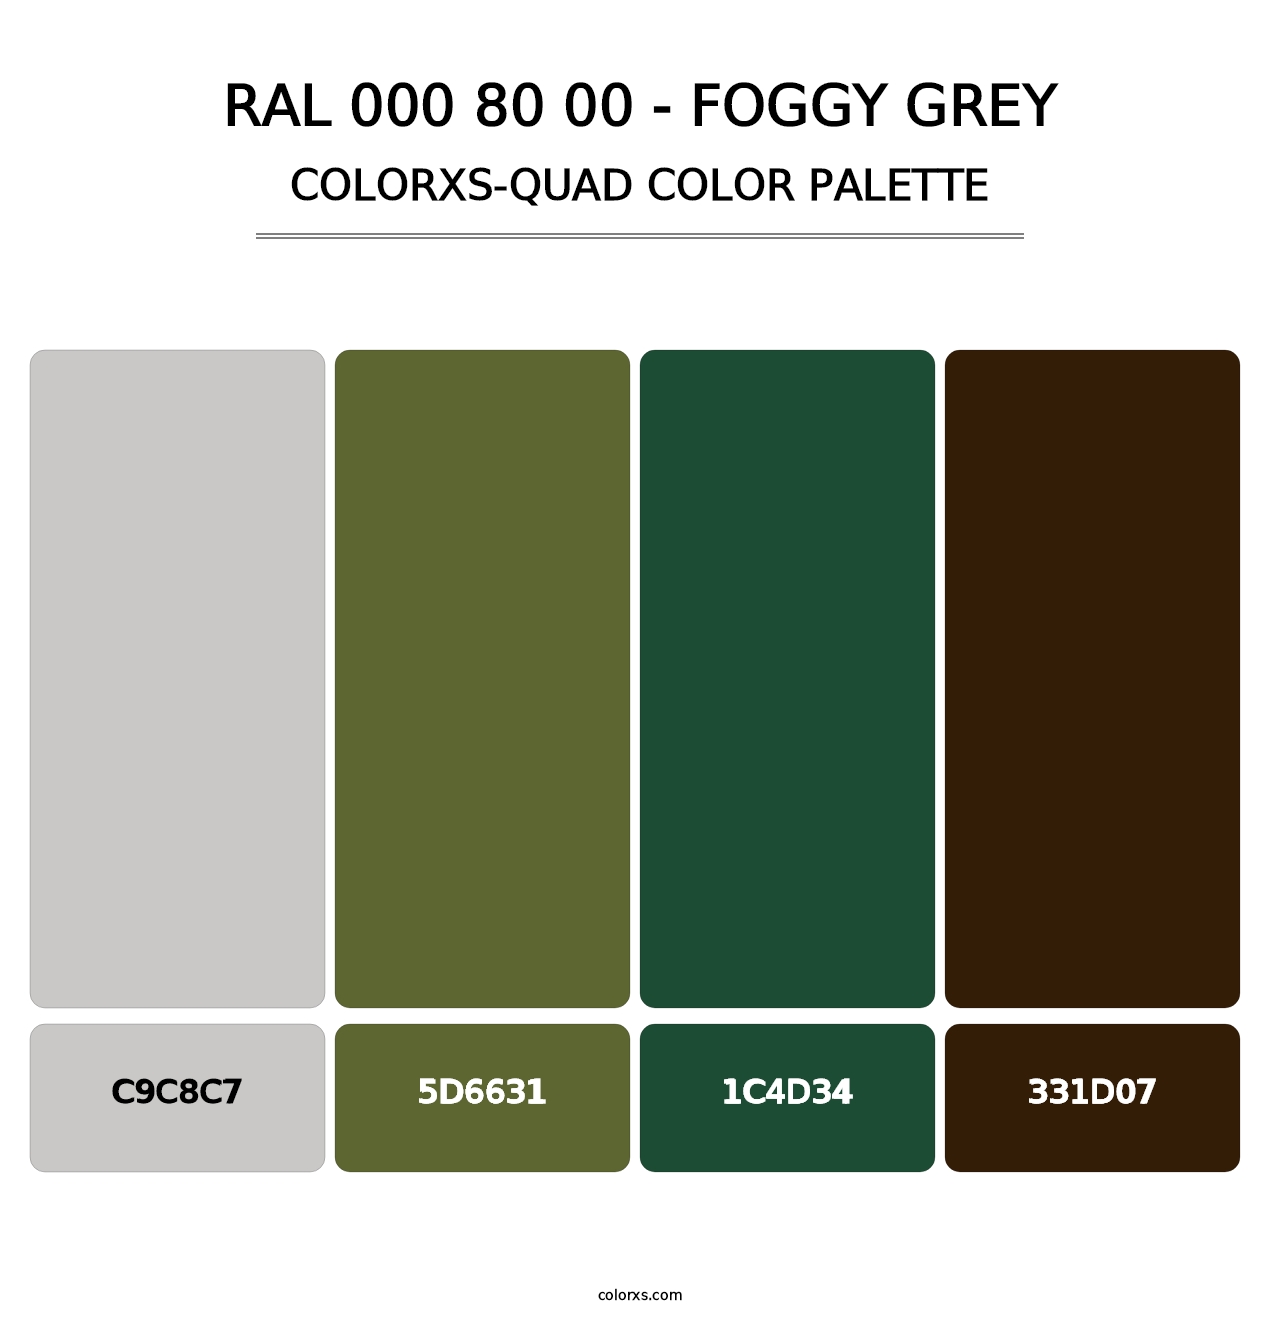 RAL 000 80 00 - Foggy Grey - Colorxs Quad Palette